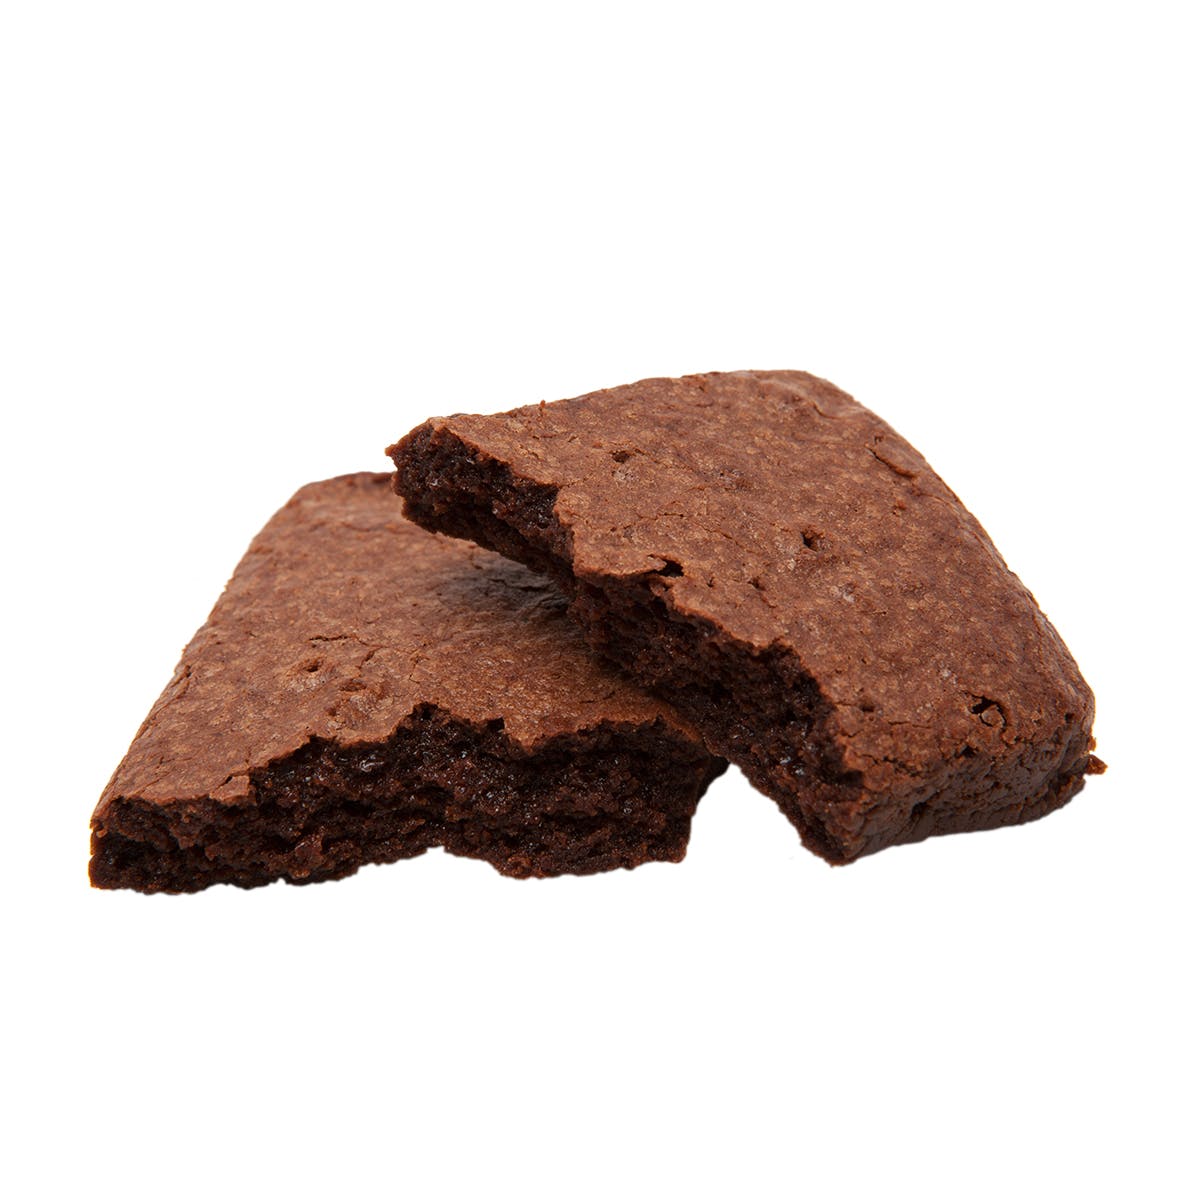 edible-fudge-brownie-180-mg-thc